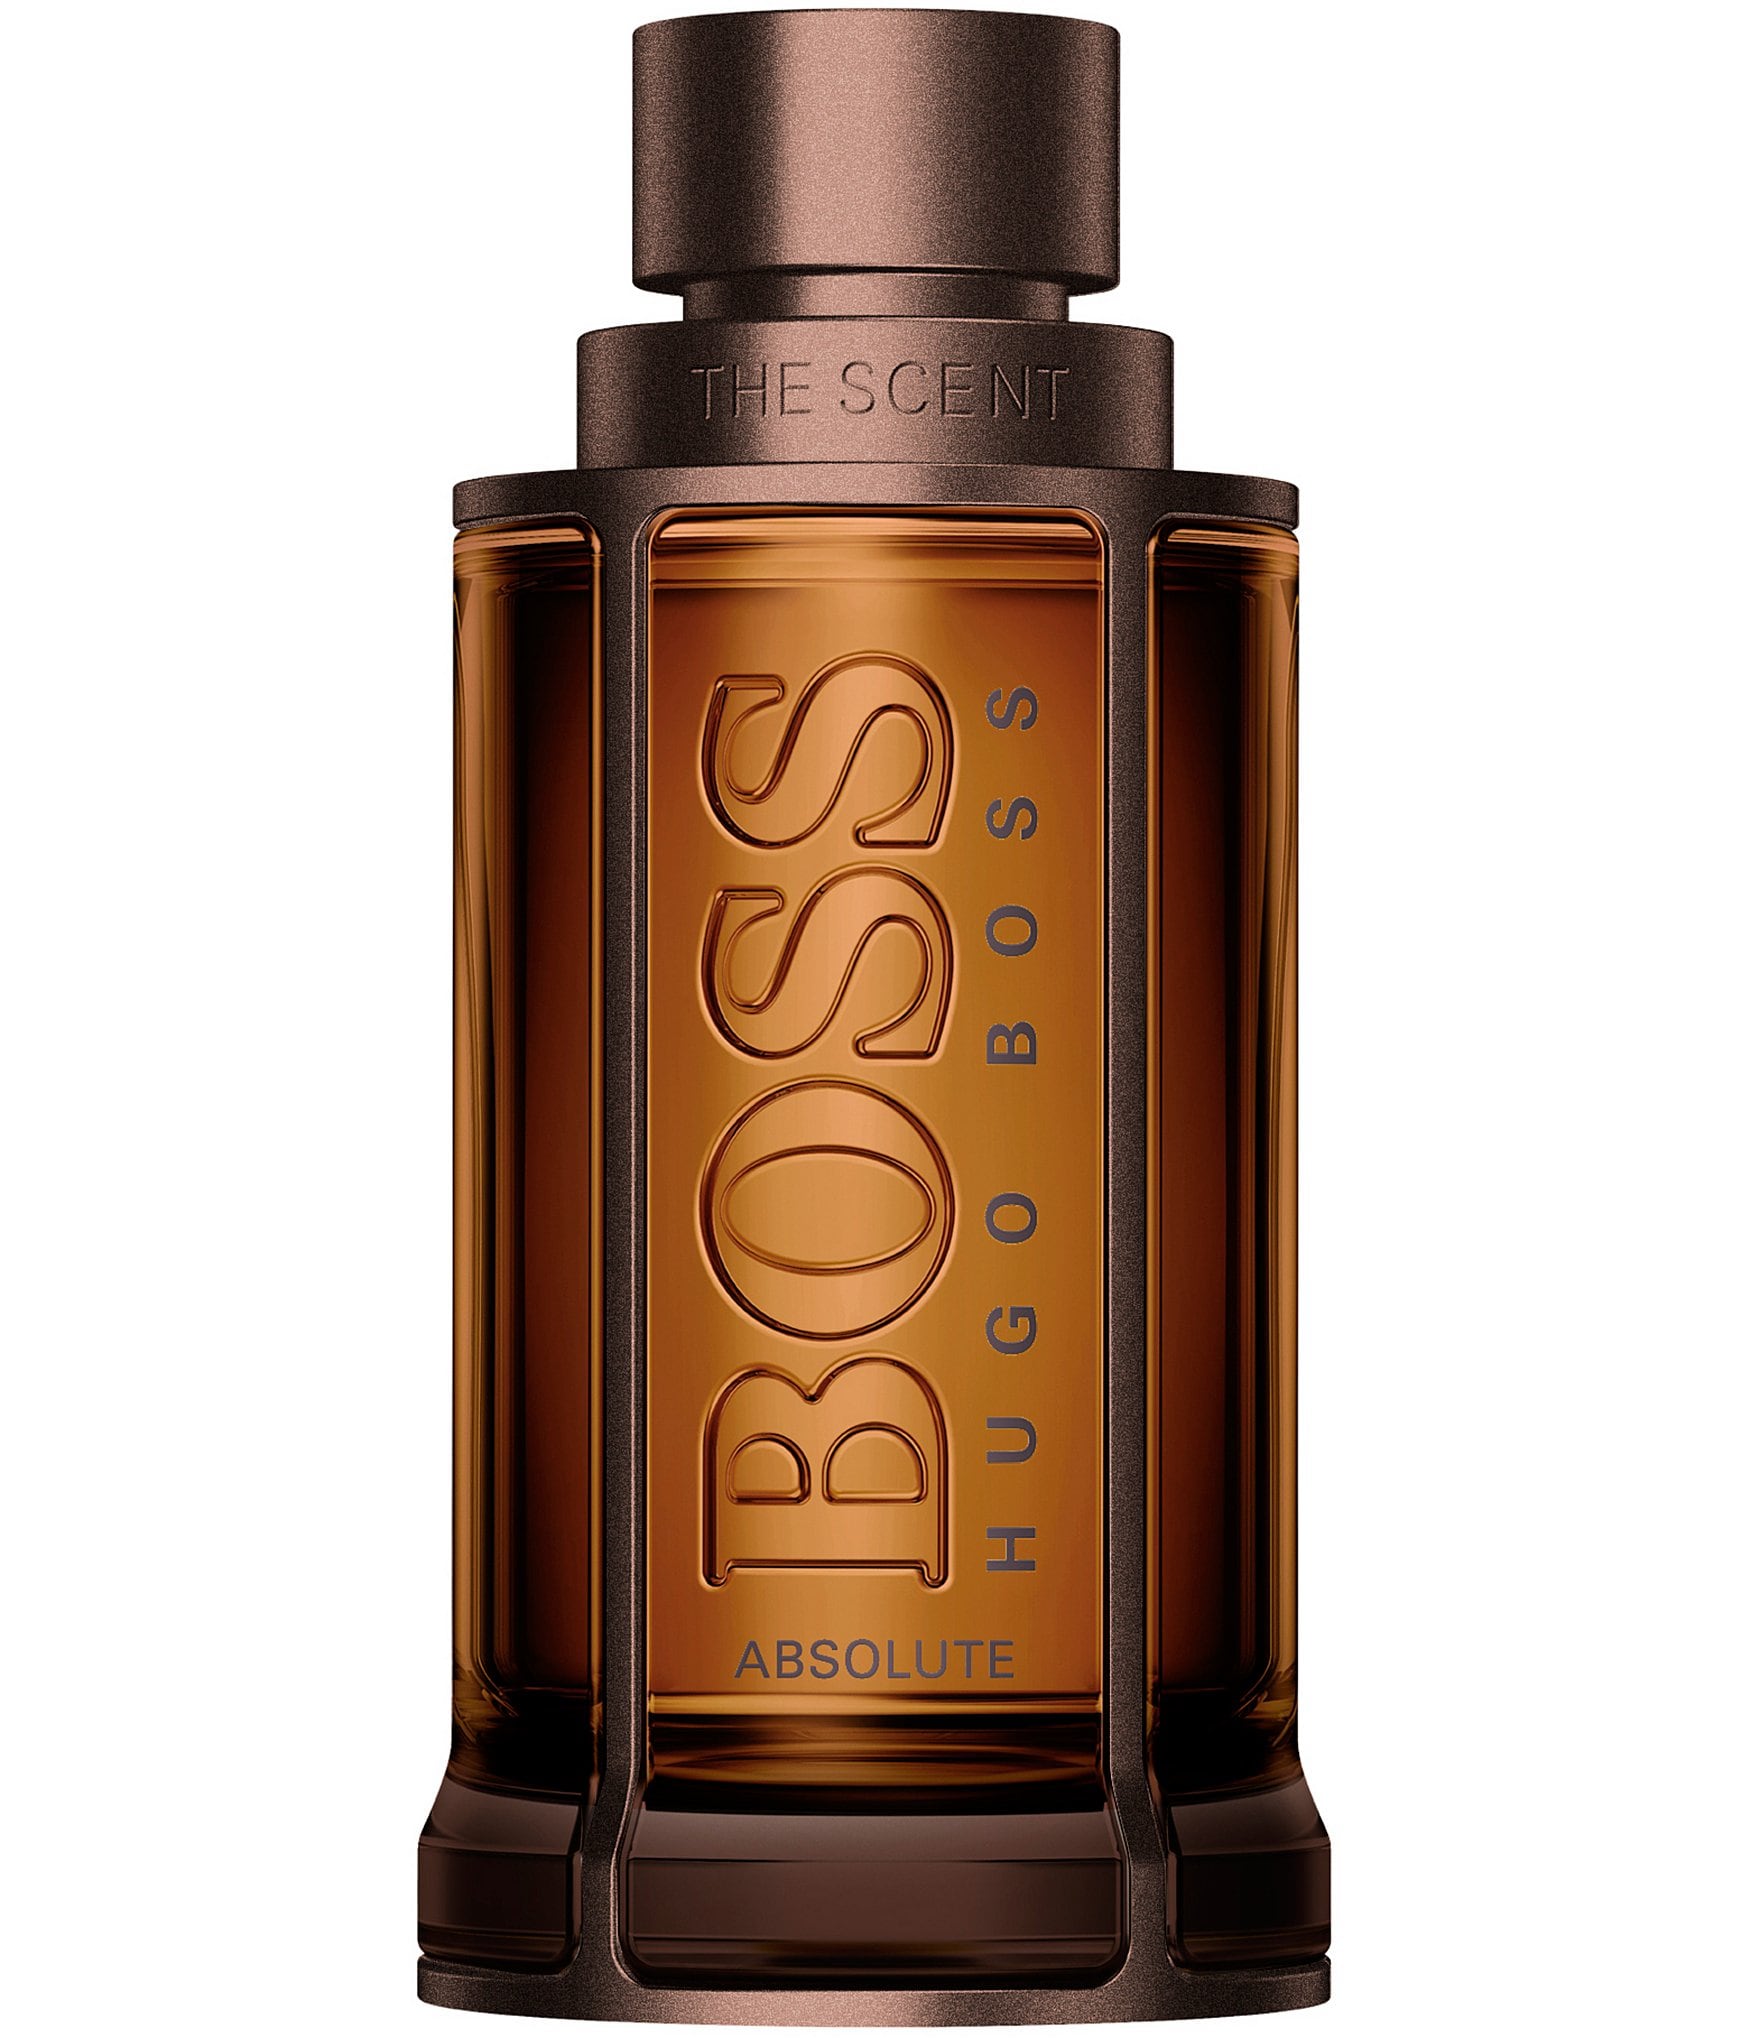 Hugo Boss Men's BOSS Bottled Infinite Eau de Parfum, 6.7-oz - Macy's